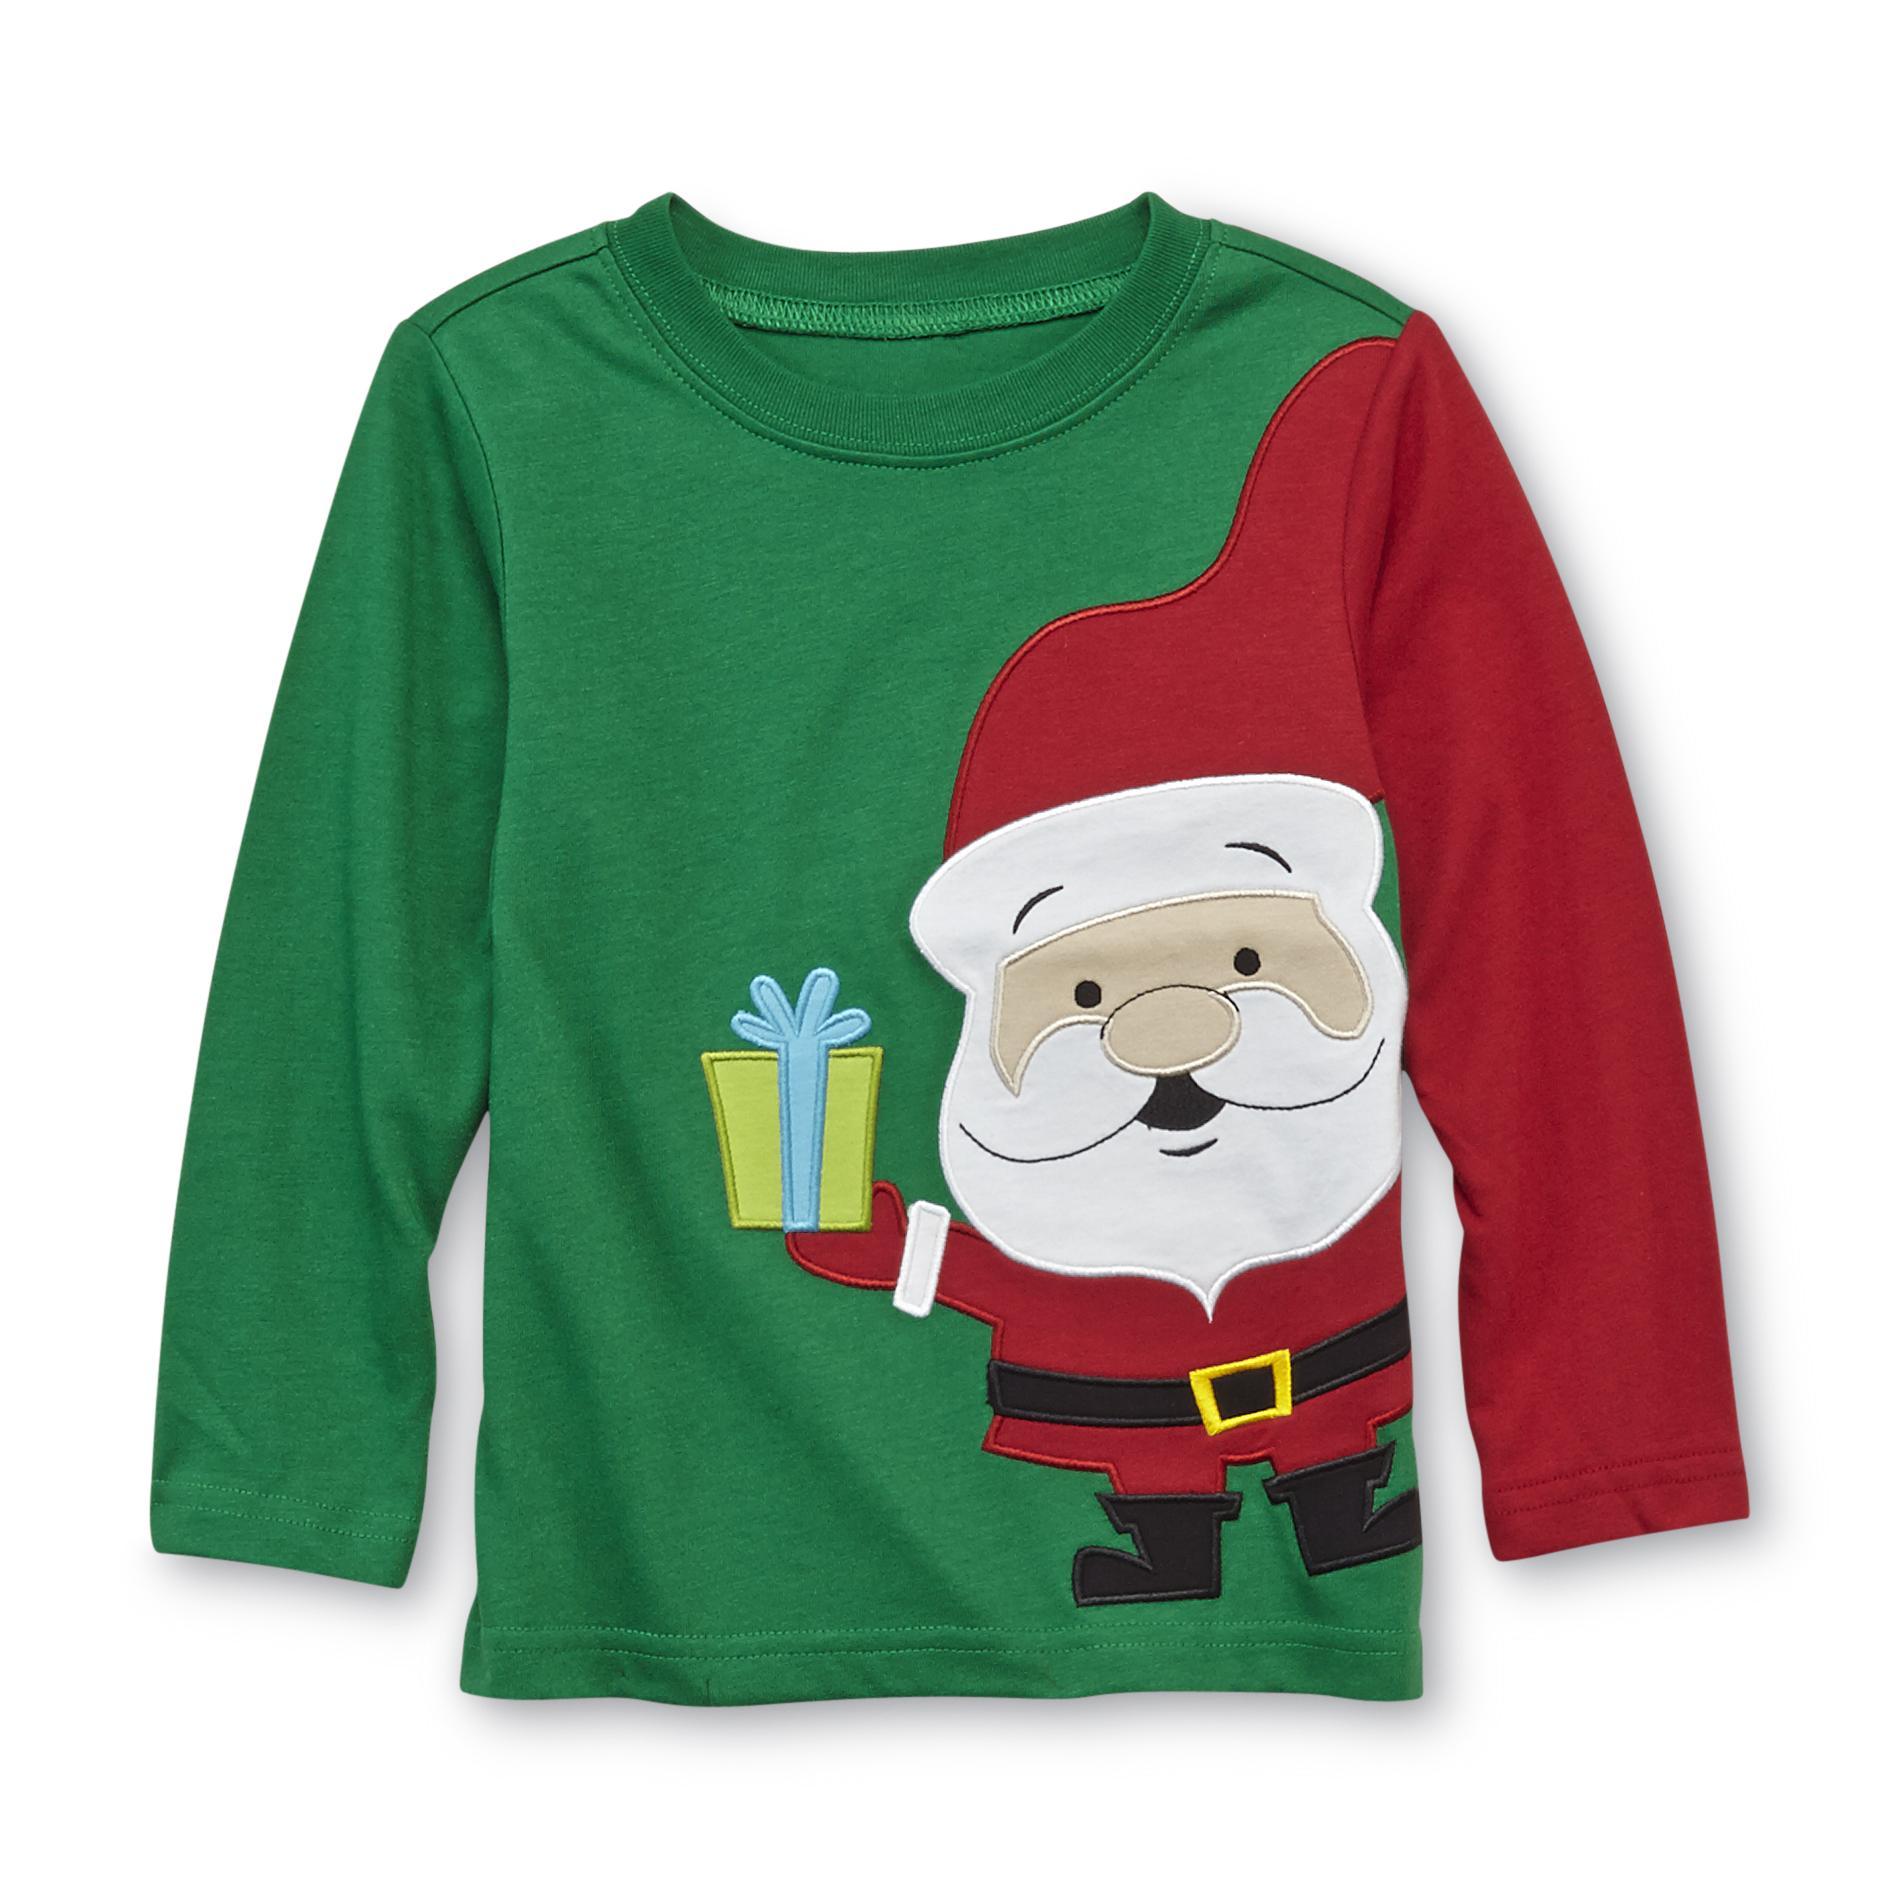 WonderKids Infant & Toddler Boy's Christmas Graphic T-Shirt - Santa Claus